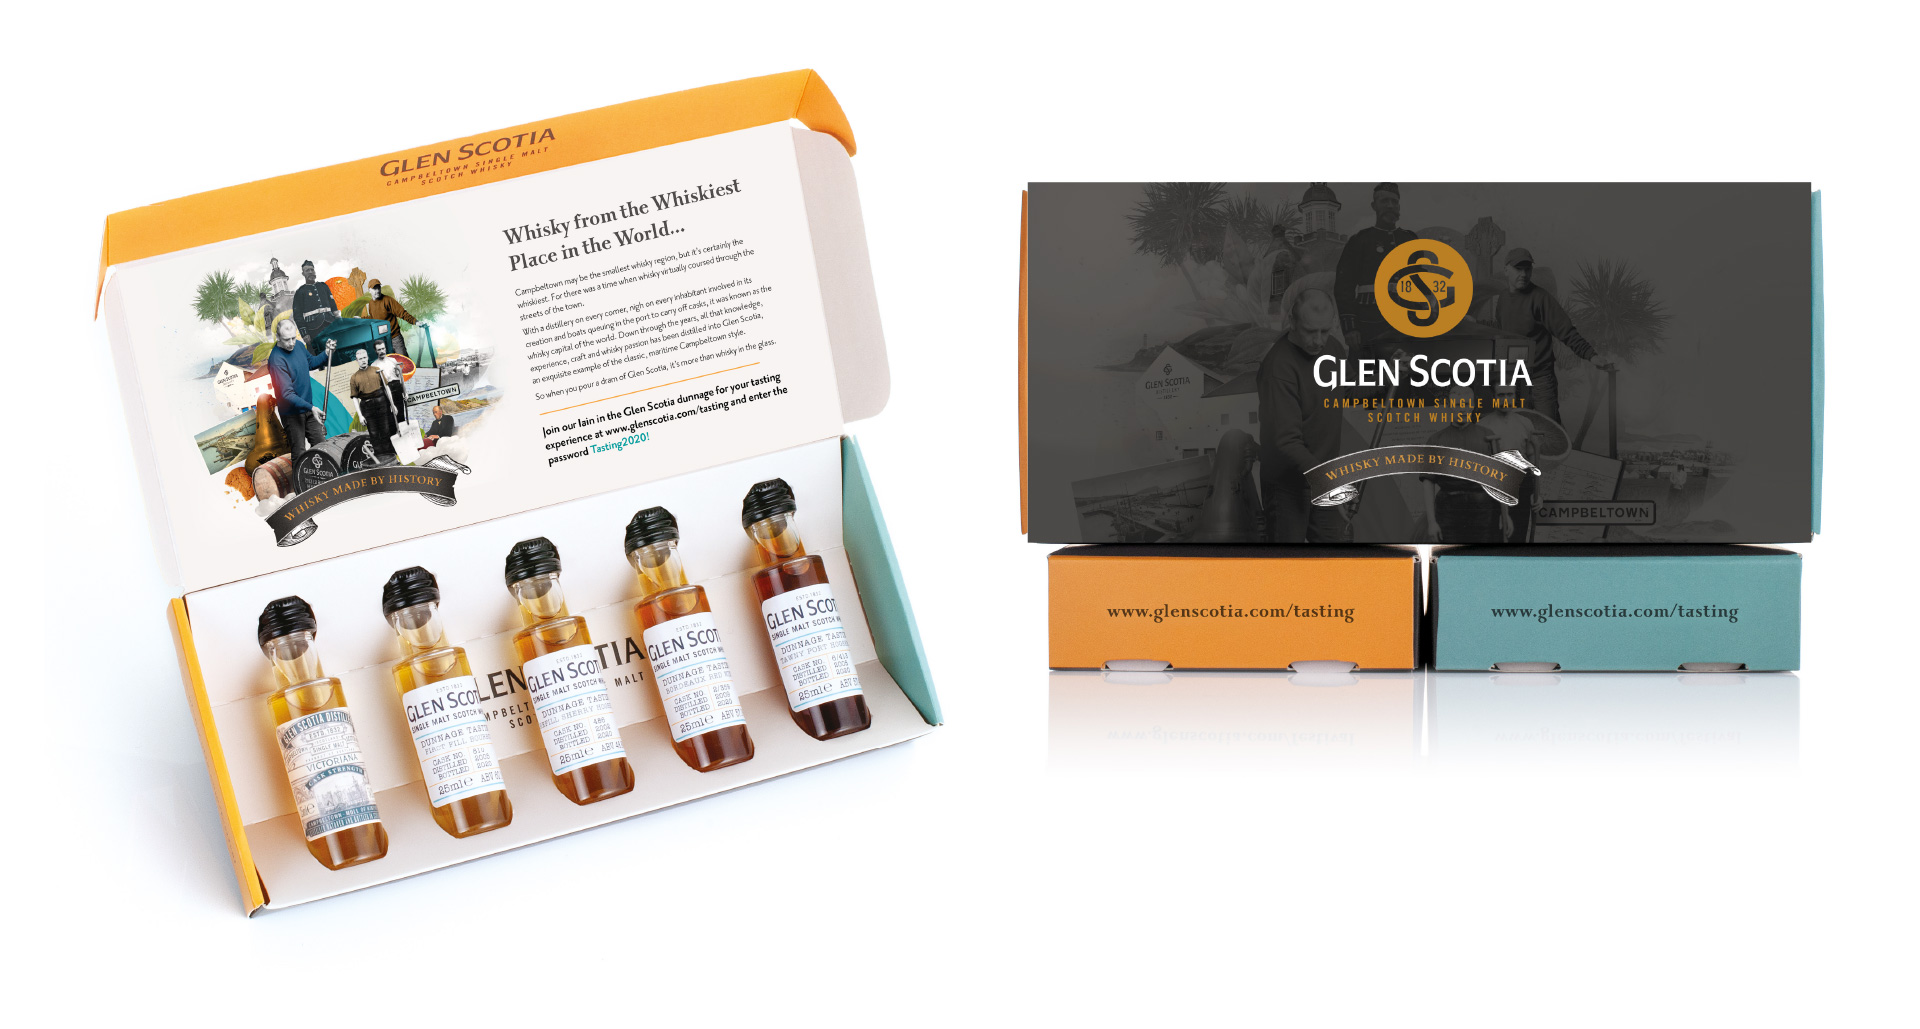 Glen Scotia Miniature Bottles Tasting Pack Packaging Design